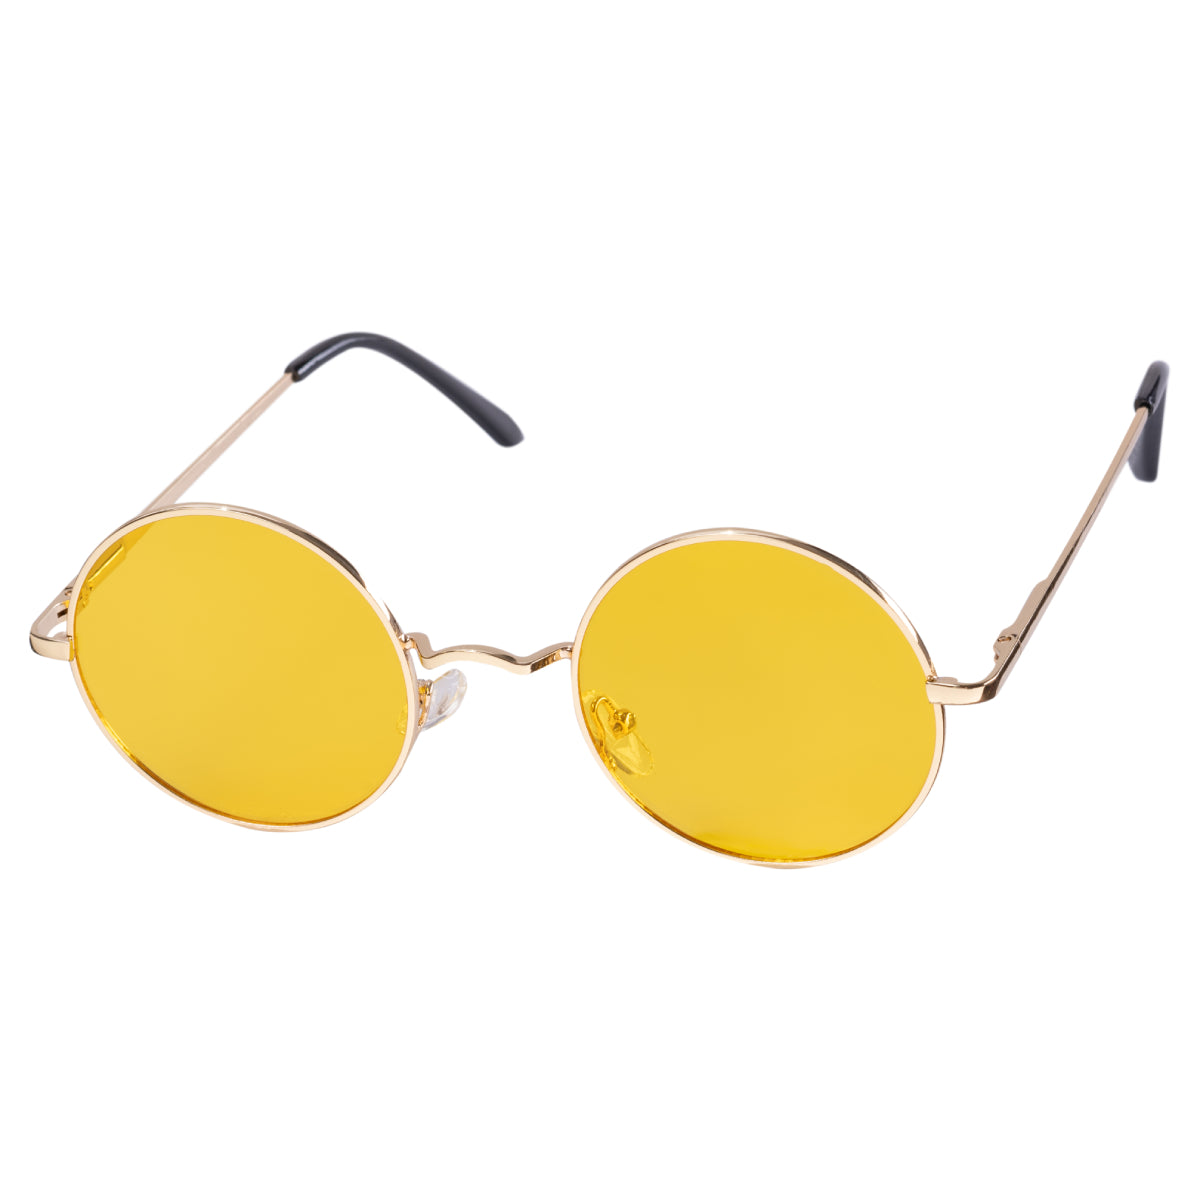 John Lennon Vintage Round Sunglasses Costume Accessory - Yellow